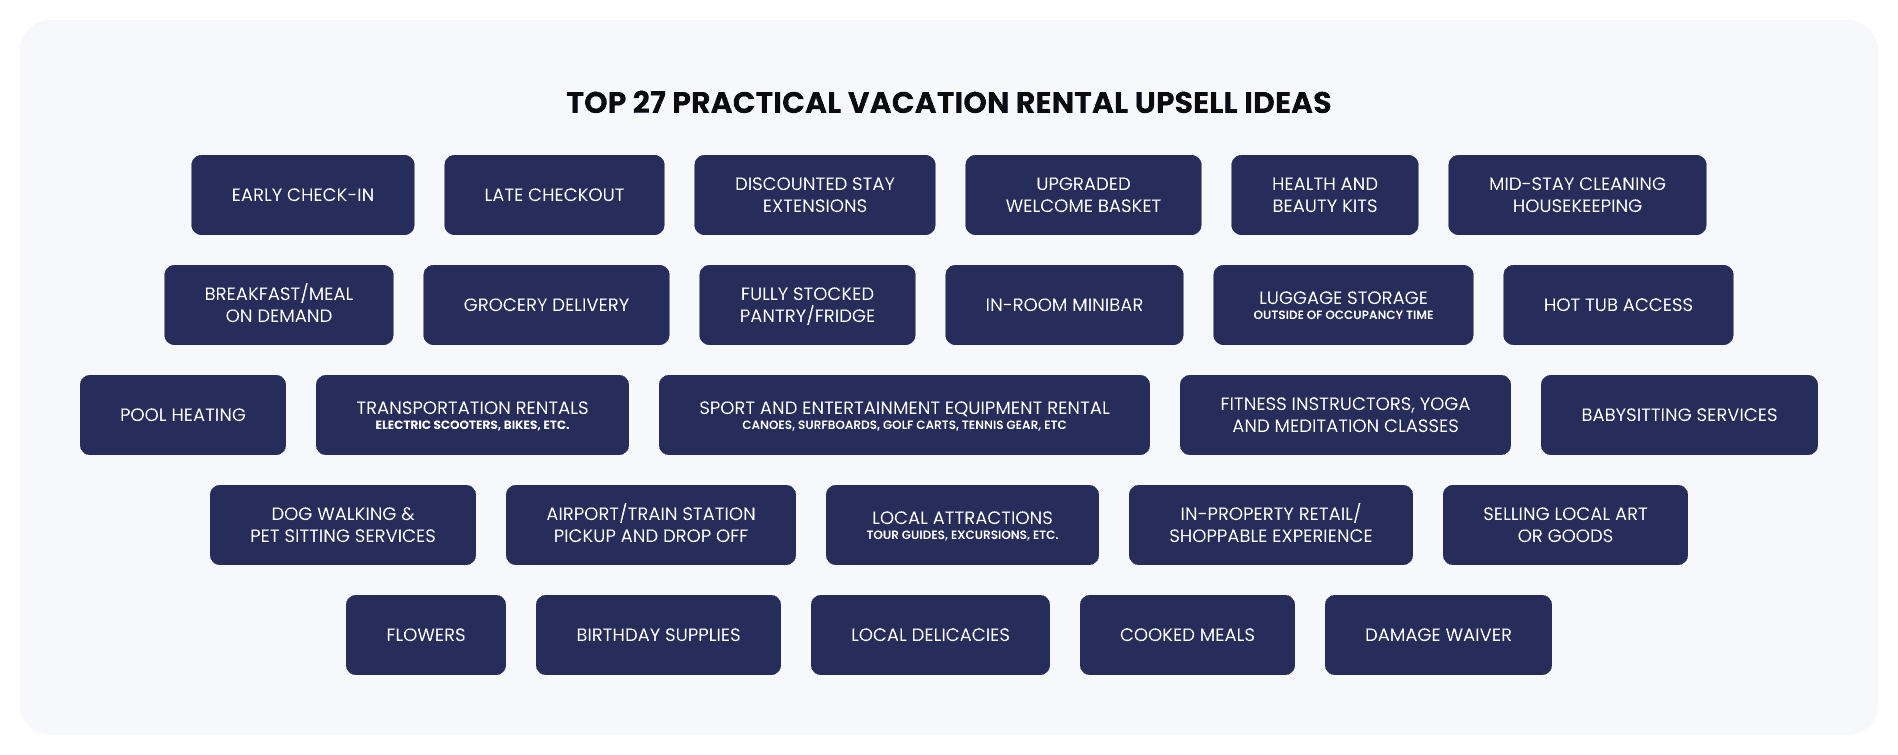 Top 27 practical vacation rental upsells